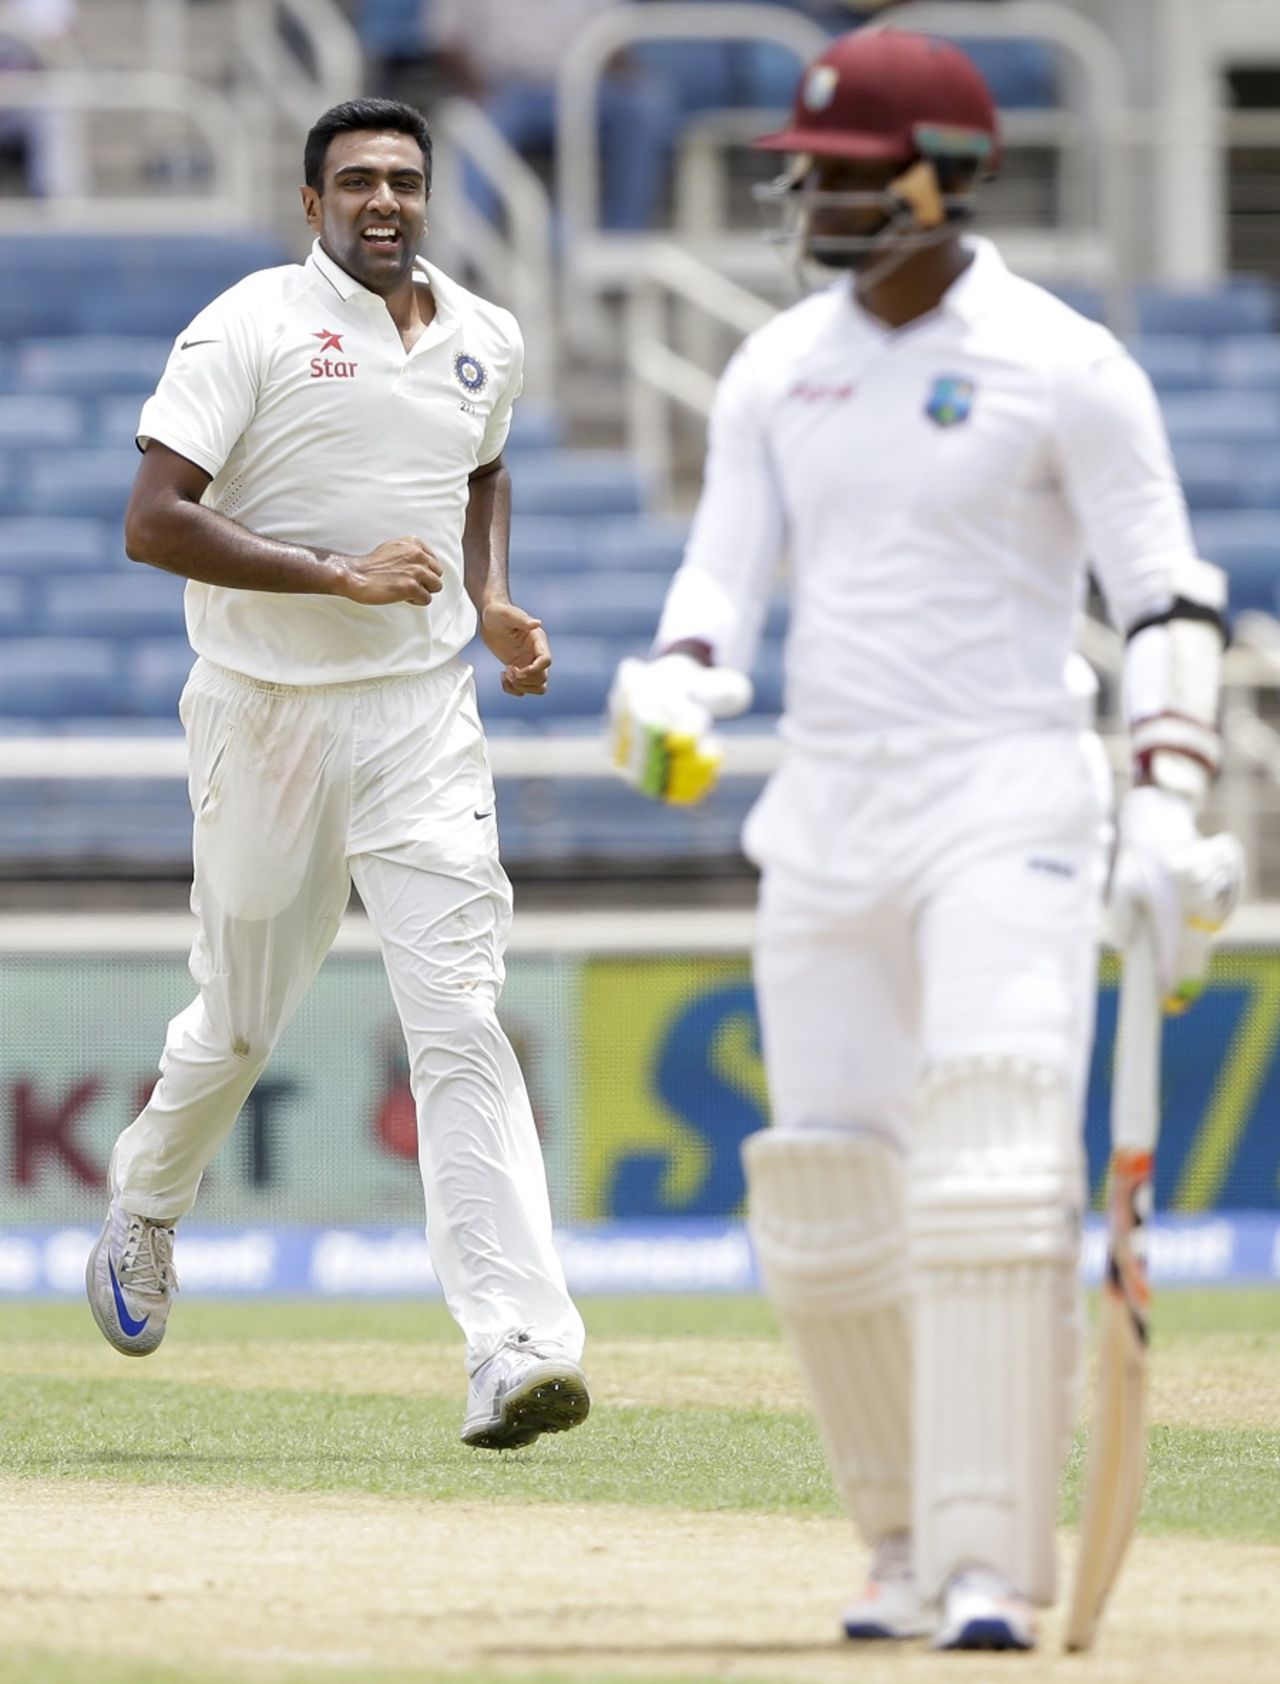 R Ashwin beat Marlon Samuels in flight, West Indies v India, 2nd Test, Kingston, 1st day, July 30, 2016